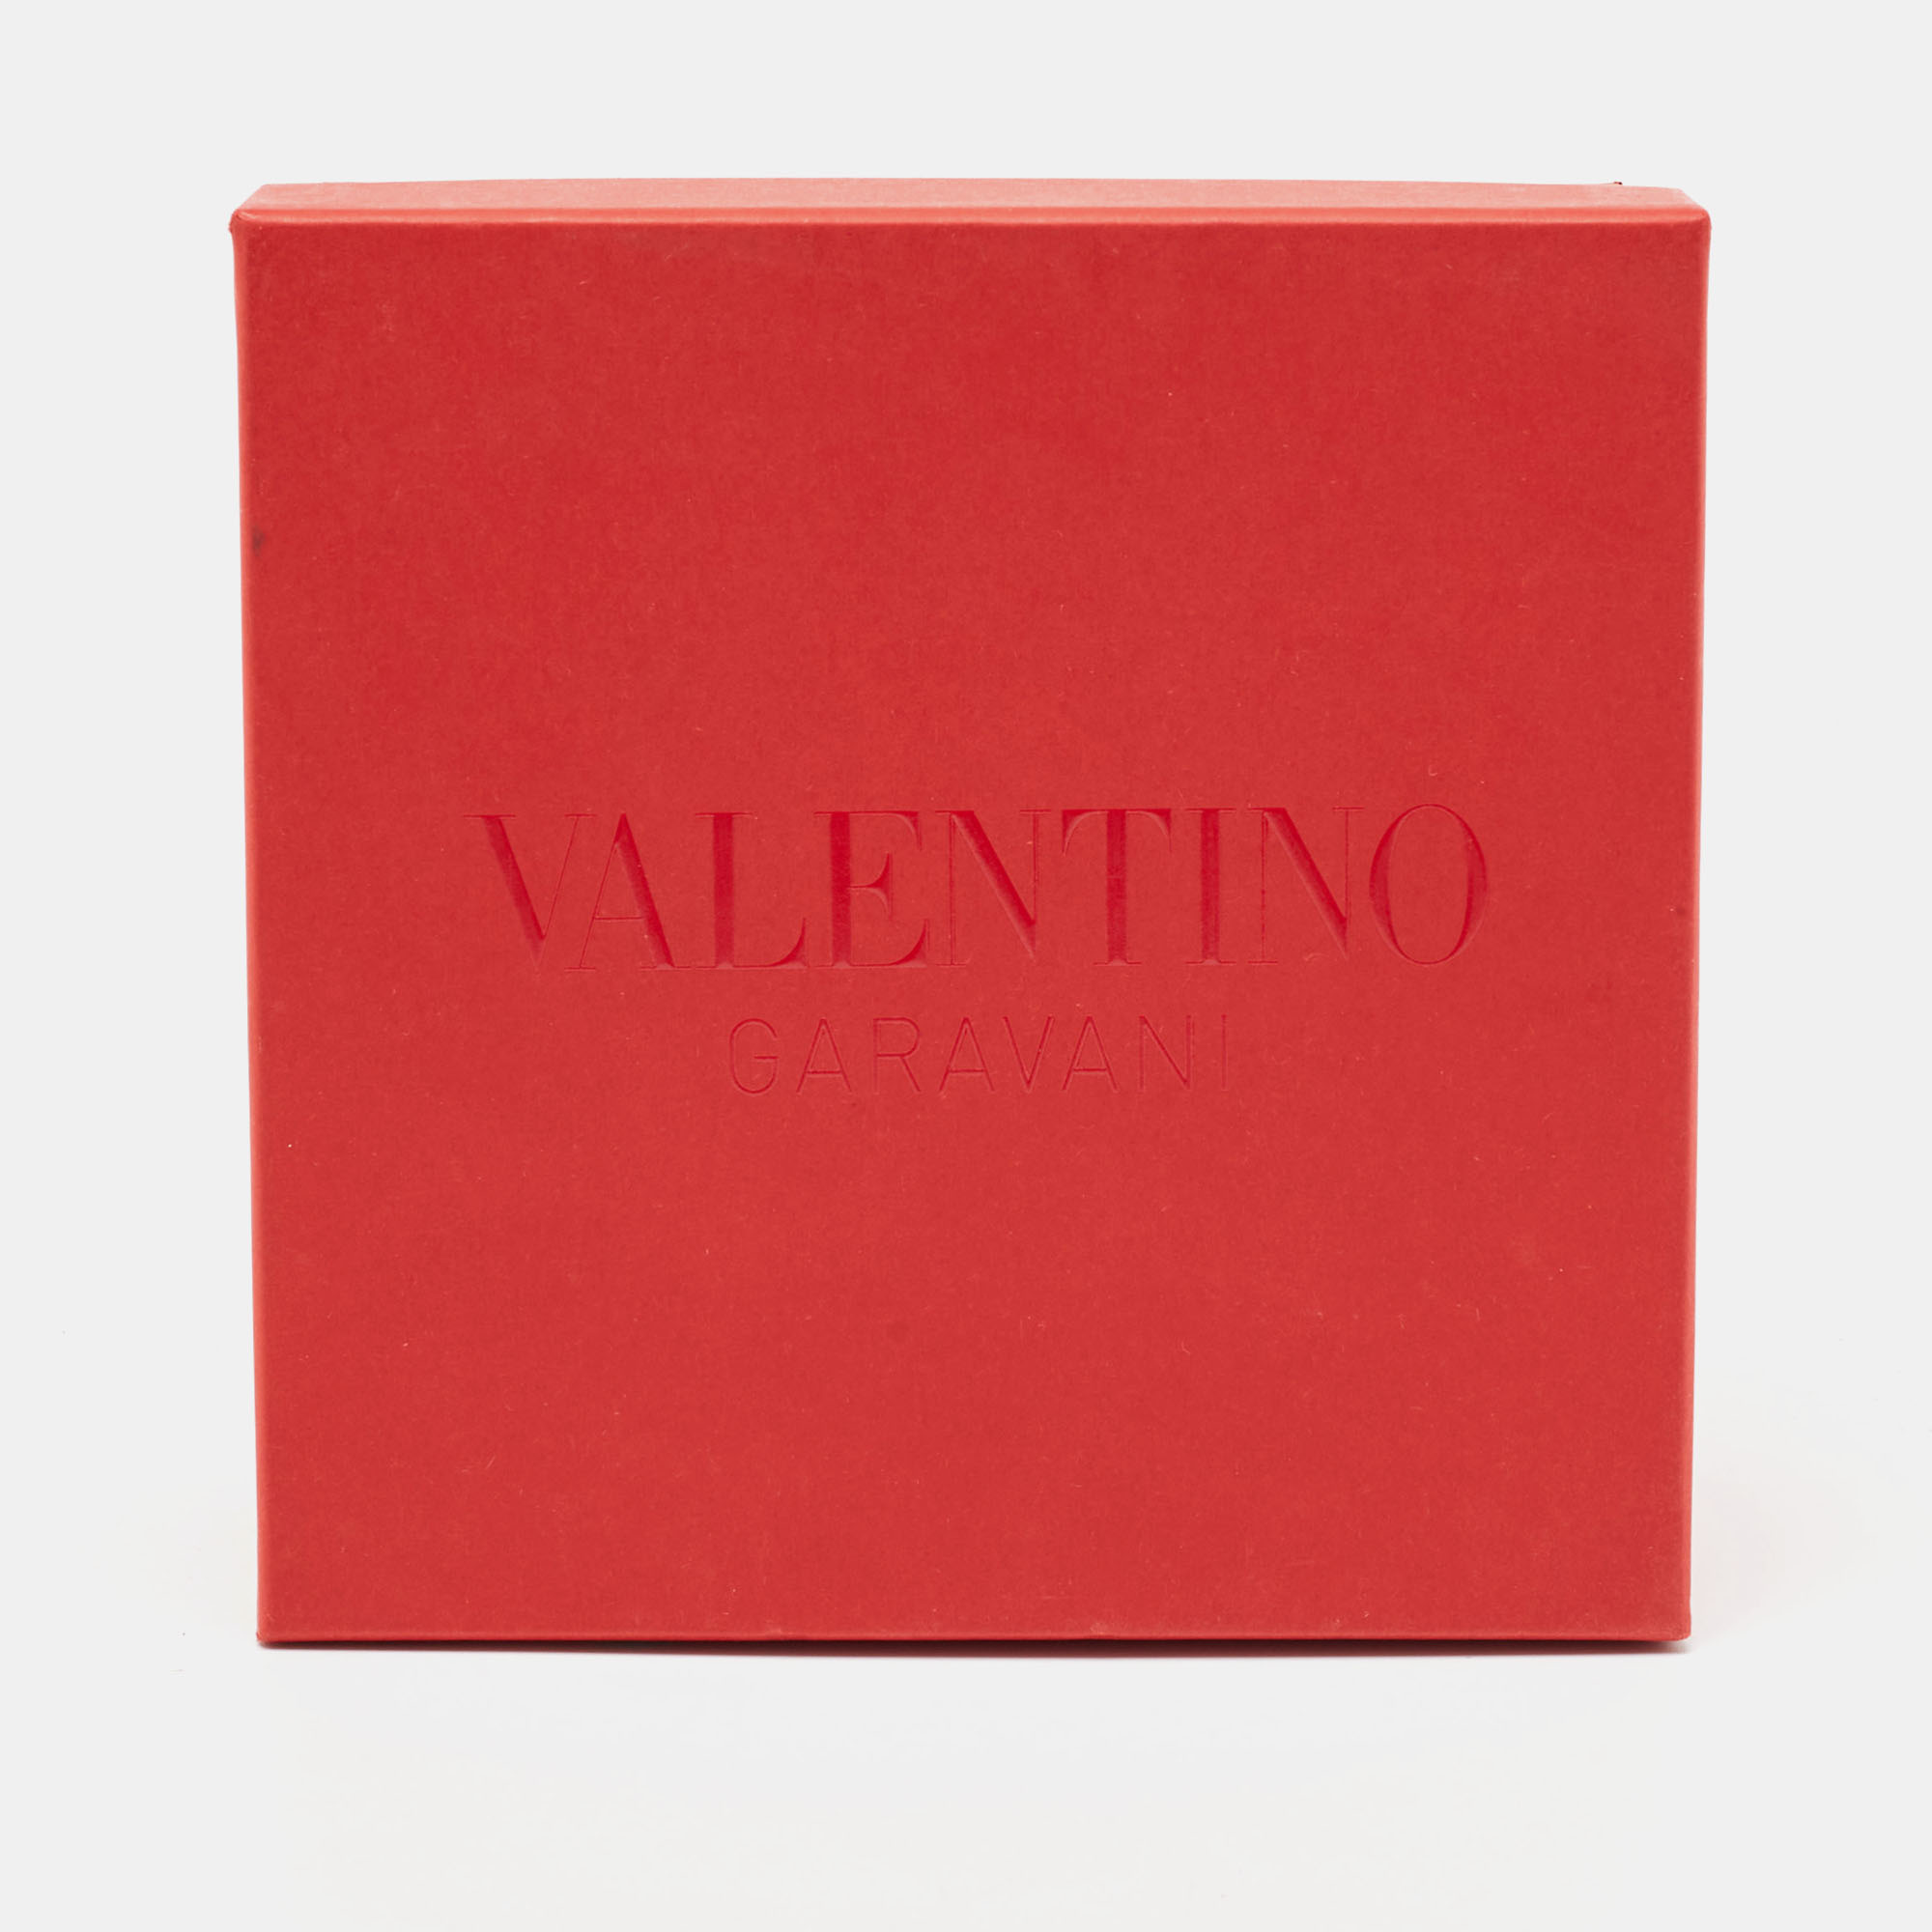 

Valentino Mint Green/White Leather VLogo Reversible Slim Belt